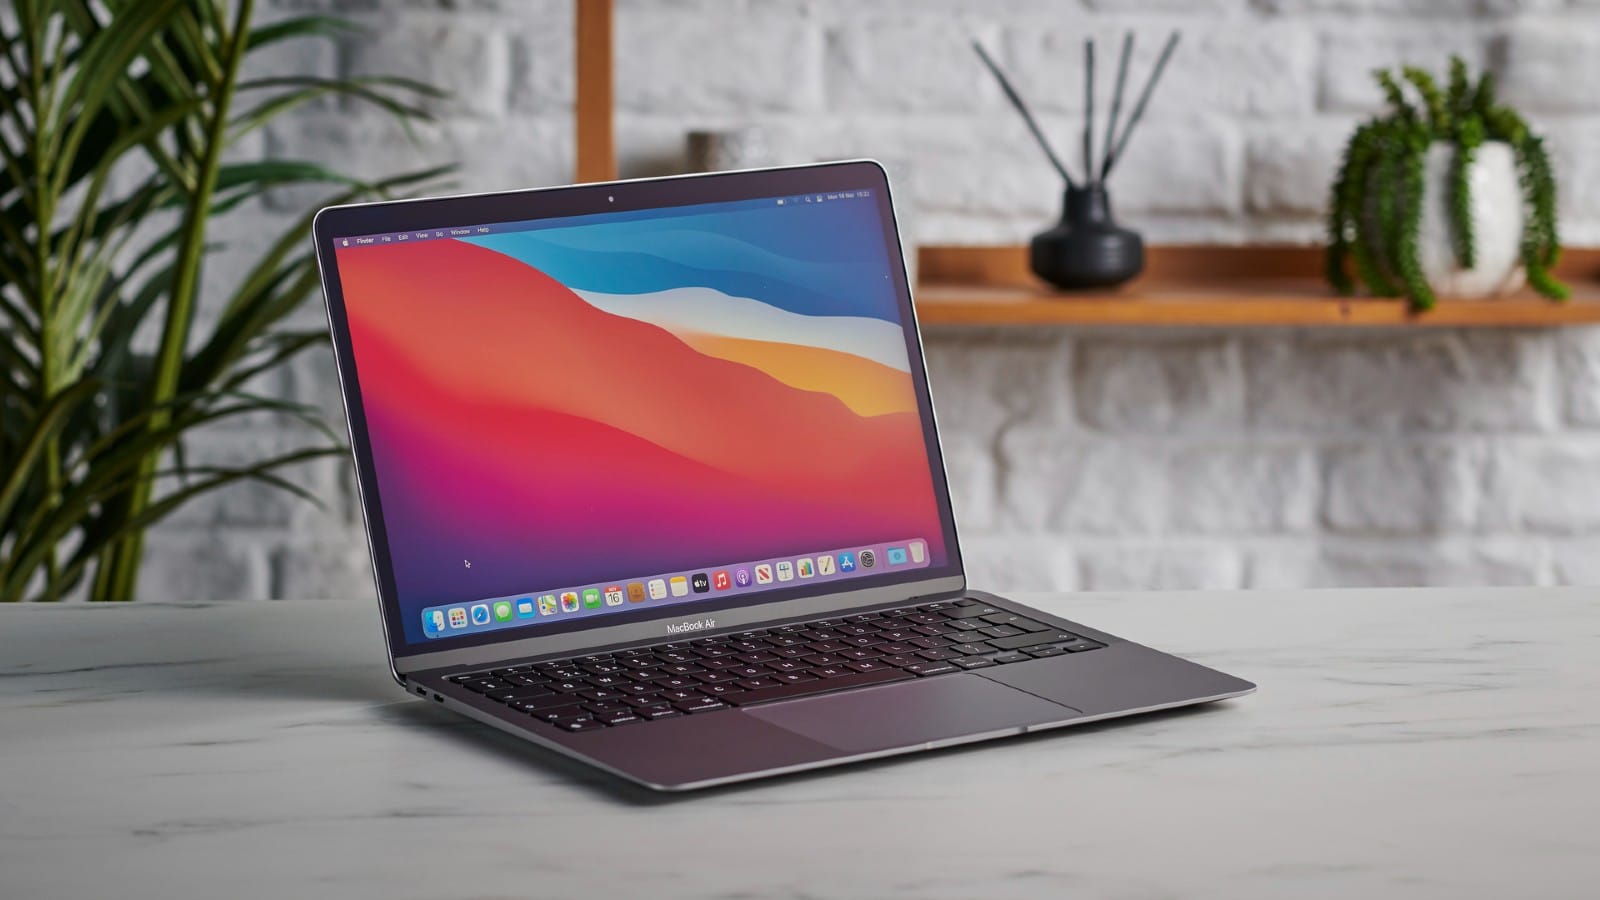 M1 MacBook, Ανταλλακτικά και εγχειρίδια επισκευής για M1 MacBook προστέθηκαν στο Self Repair της Apple